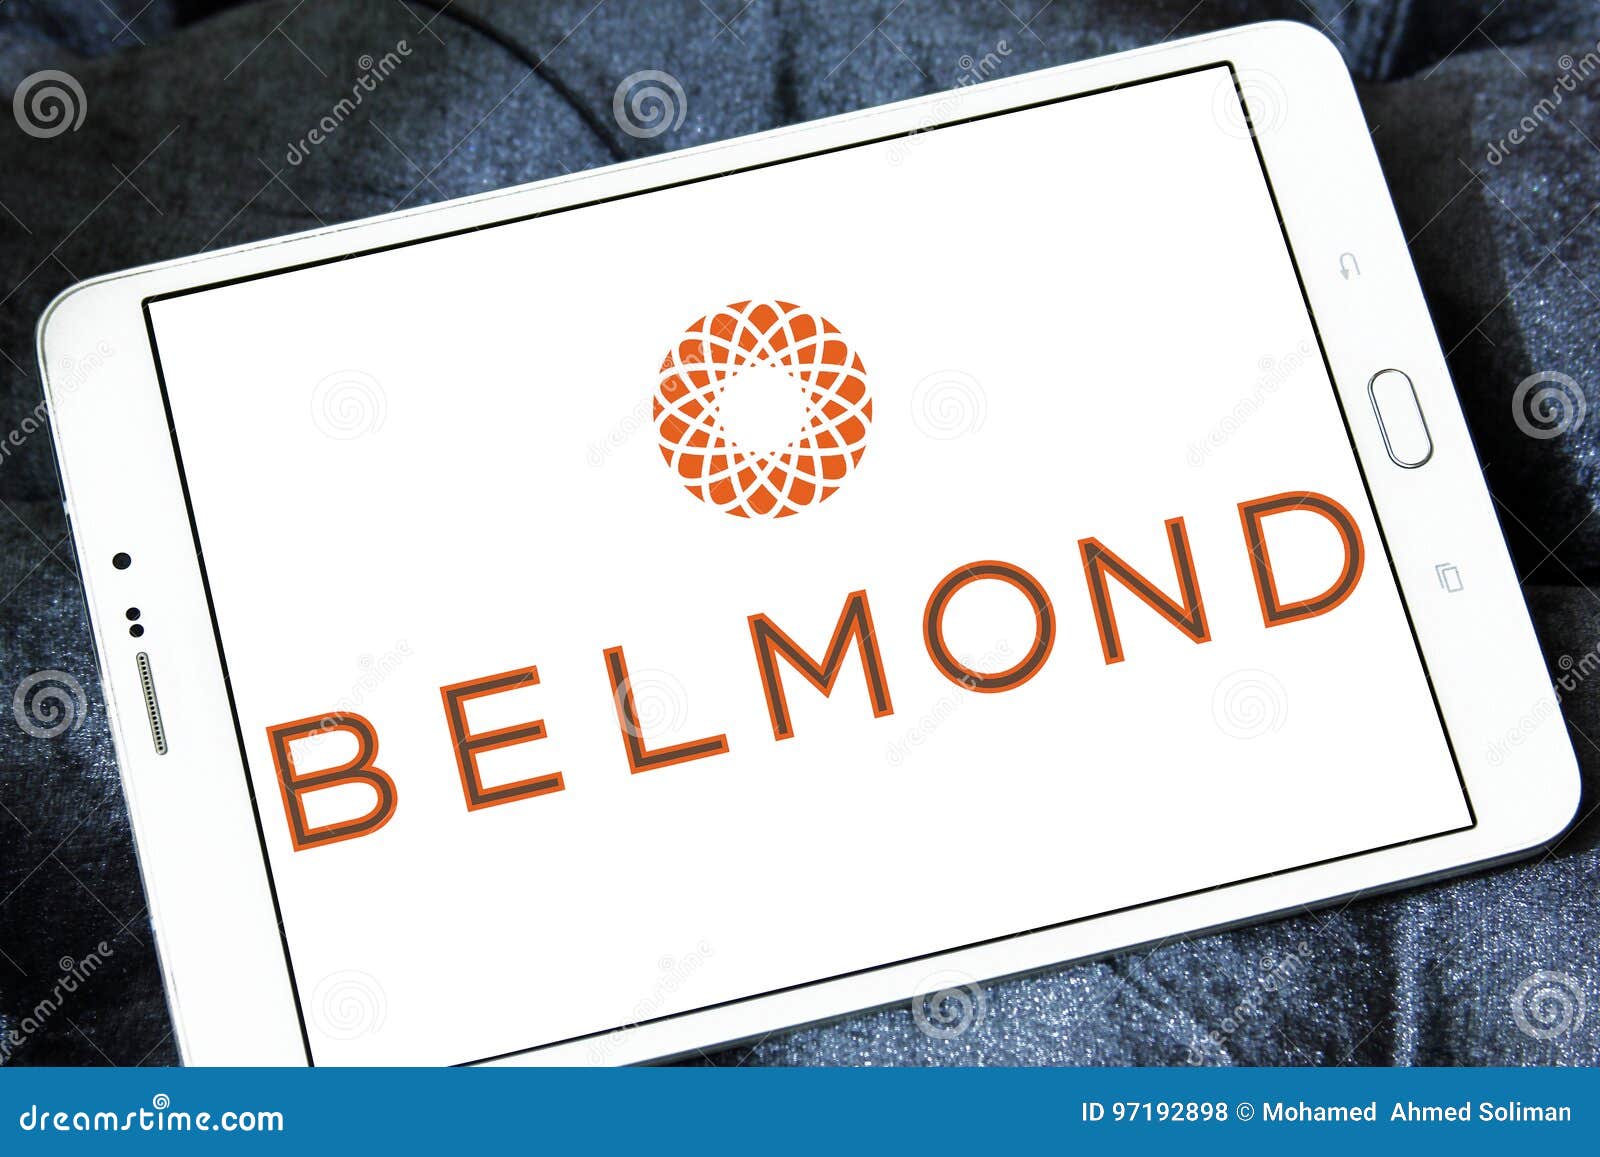 Belmond logo editorial stock photo. Image of logos, aman - 90670433